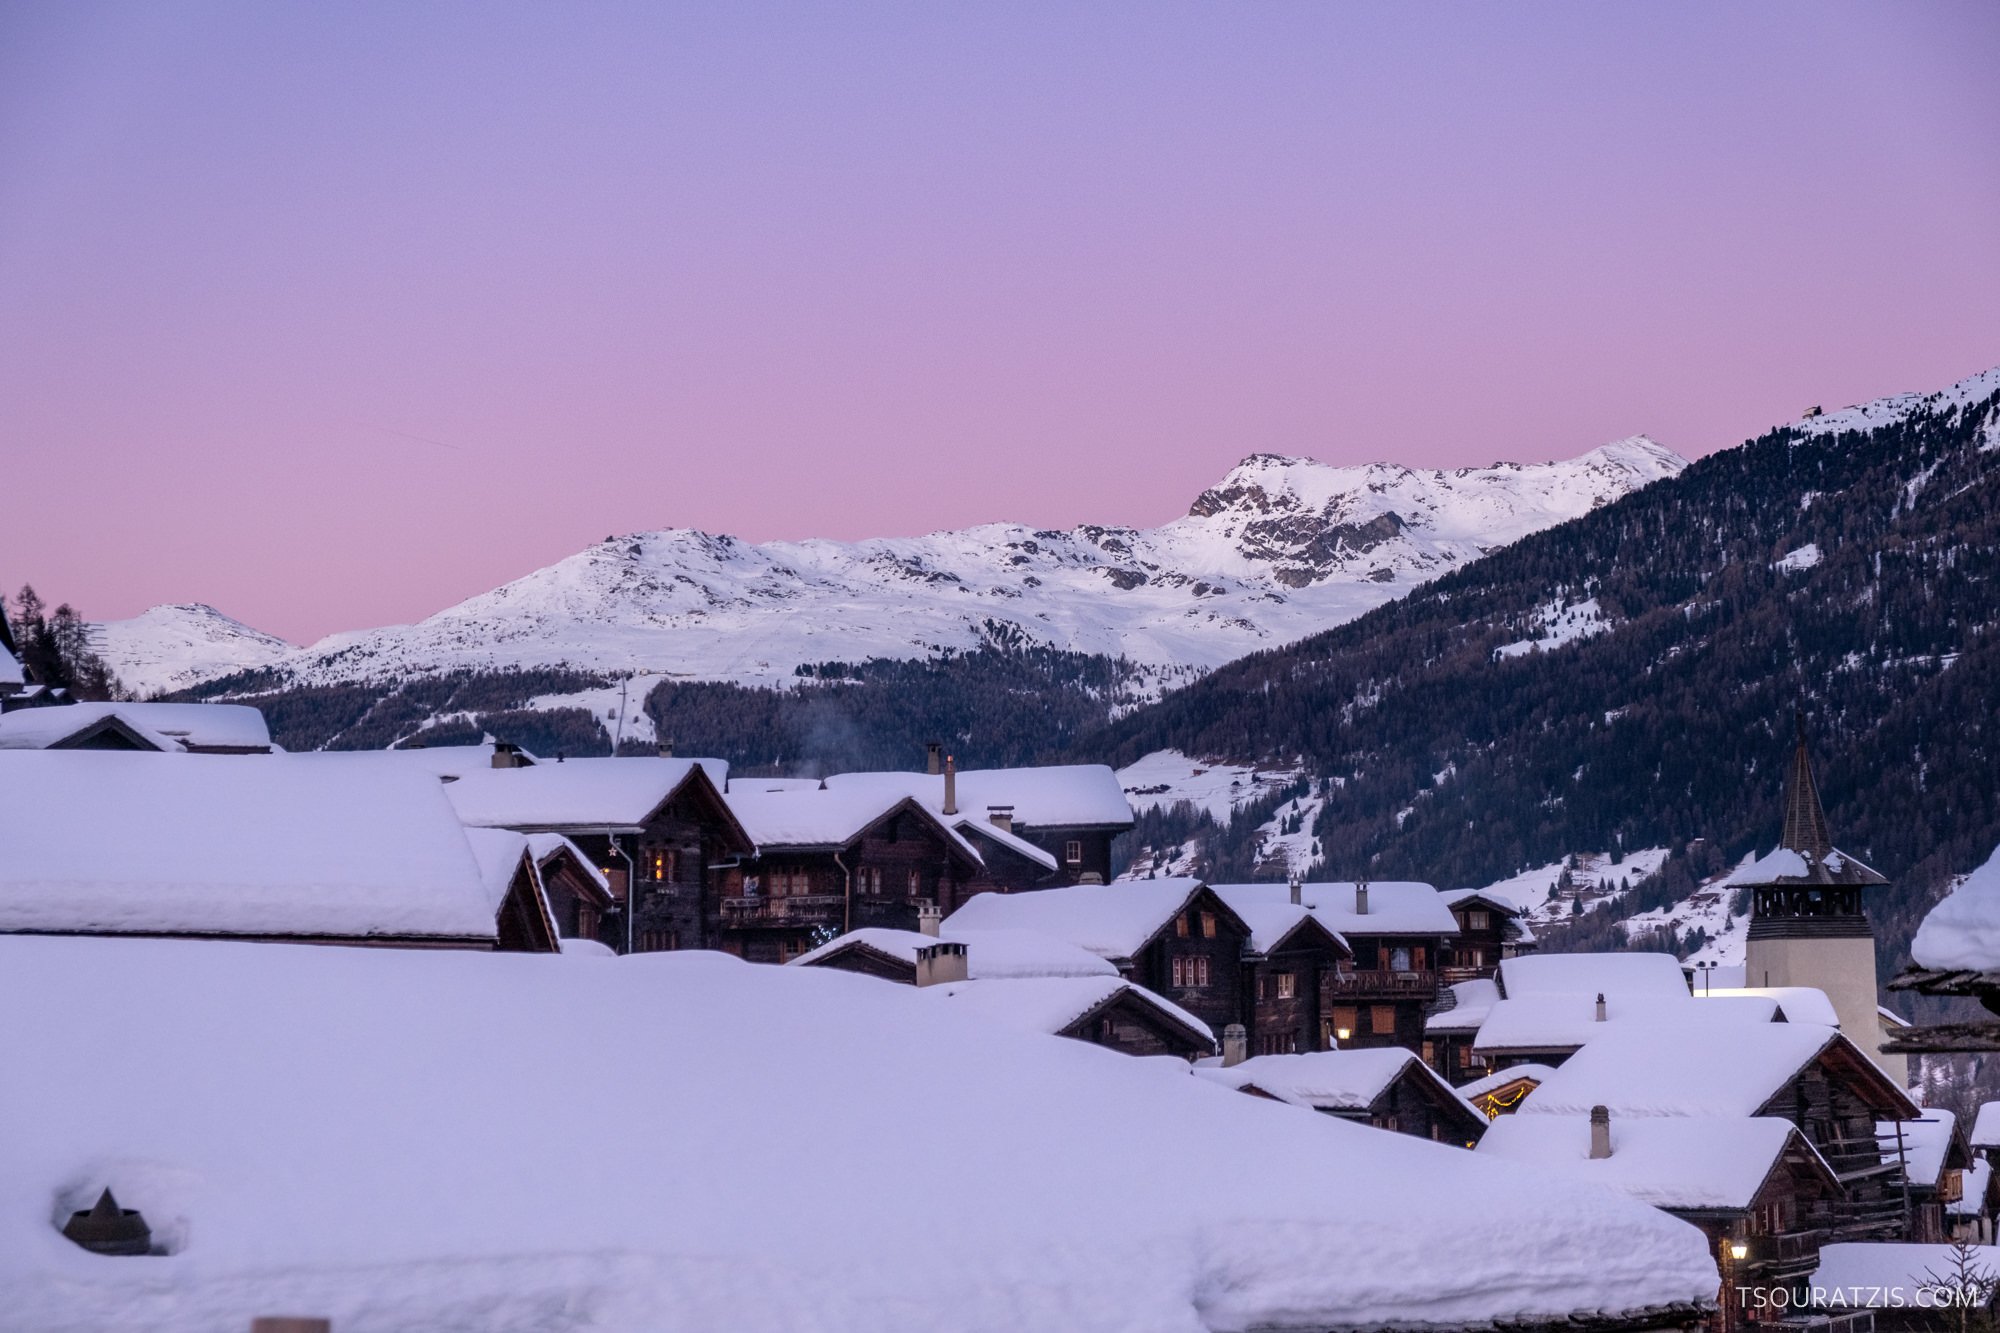 Grimentz ski resort and village in the Swiss Alps